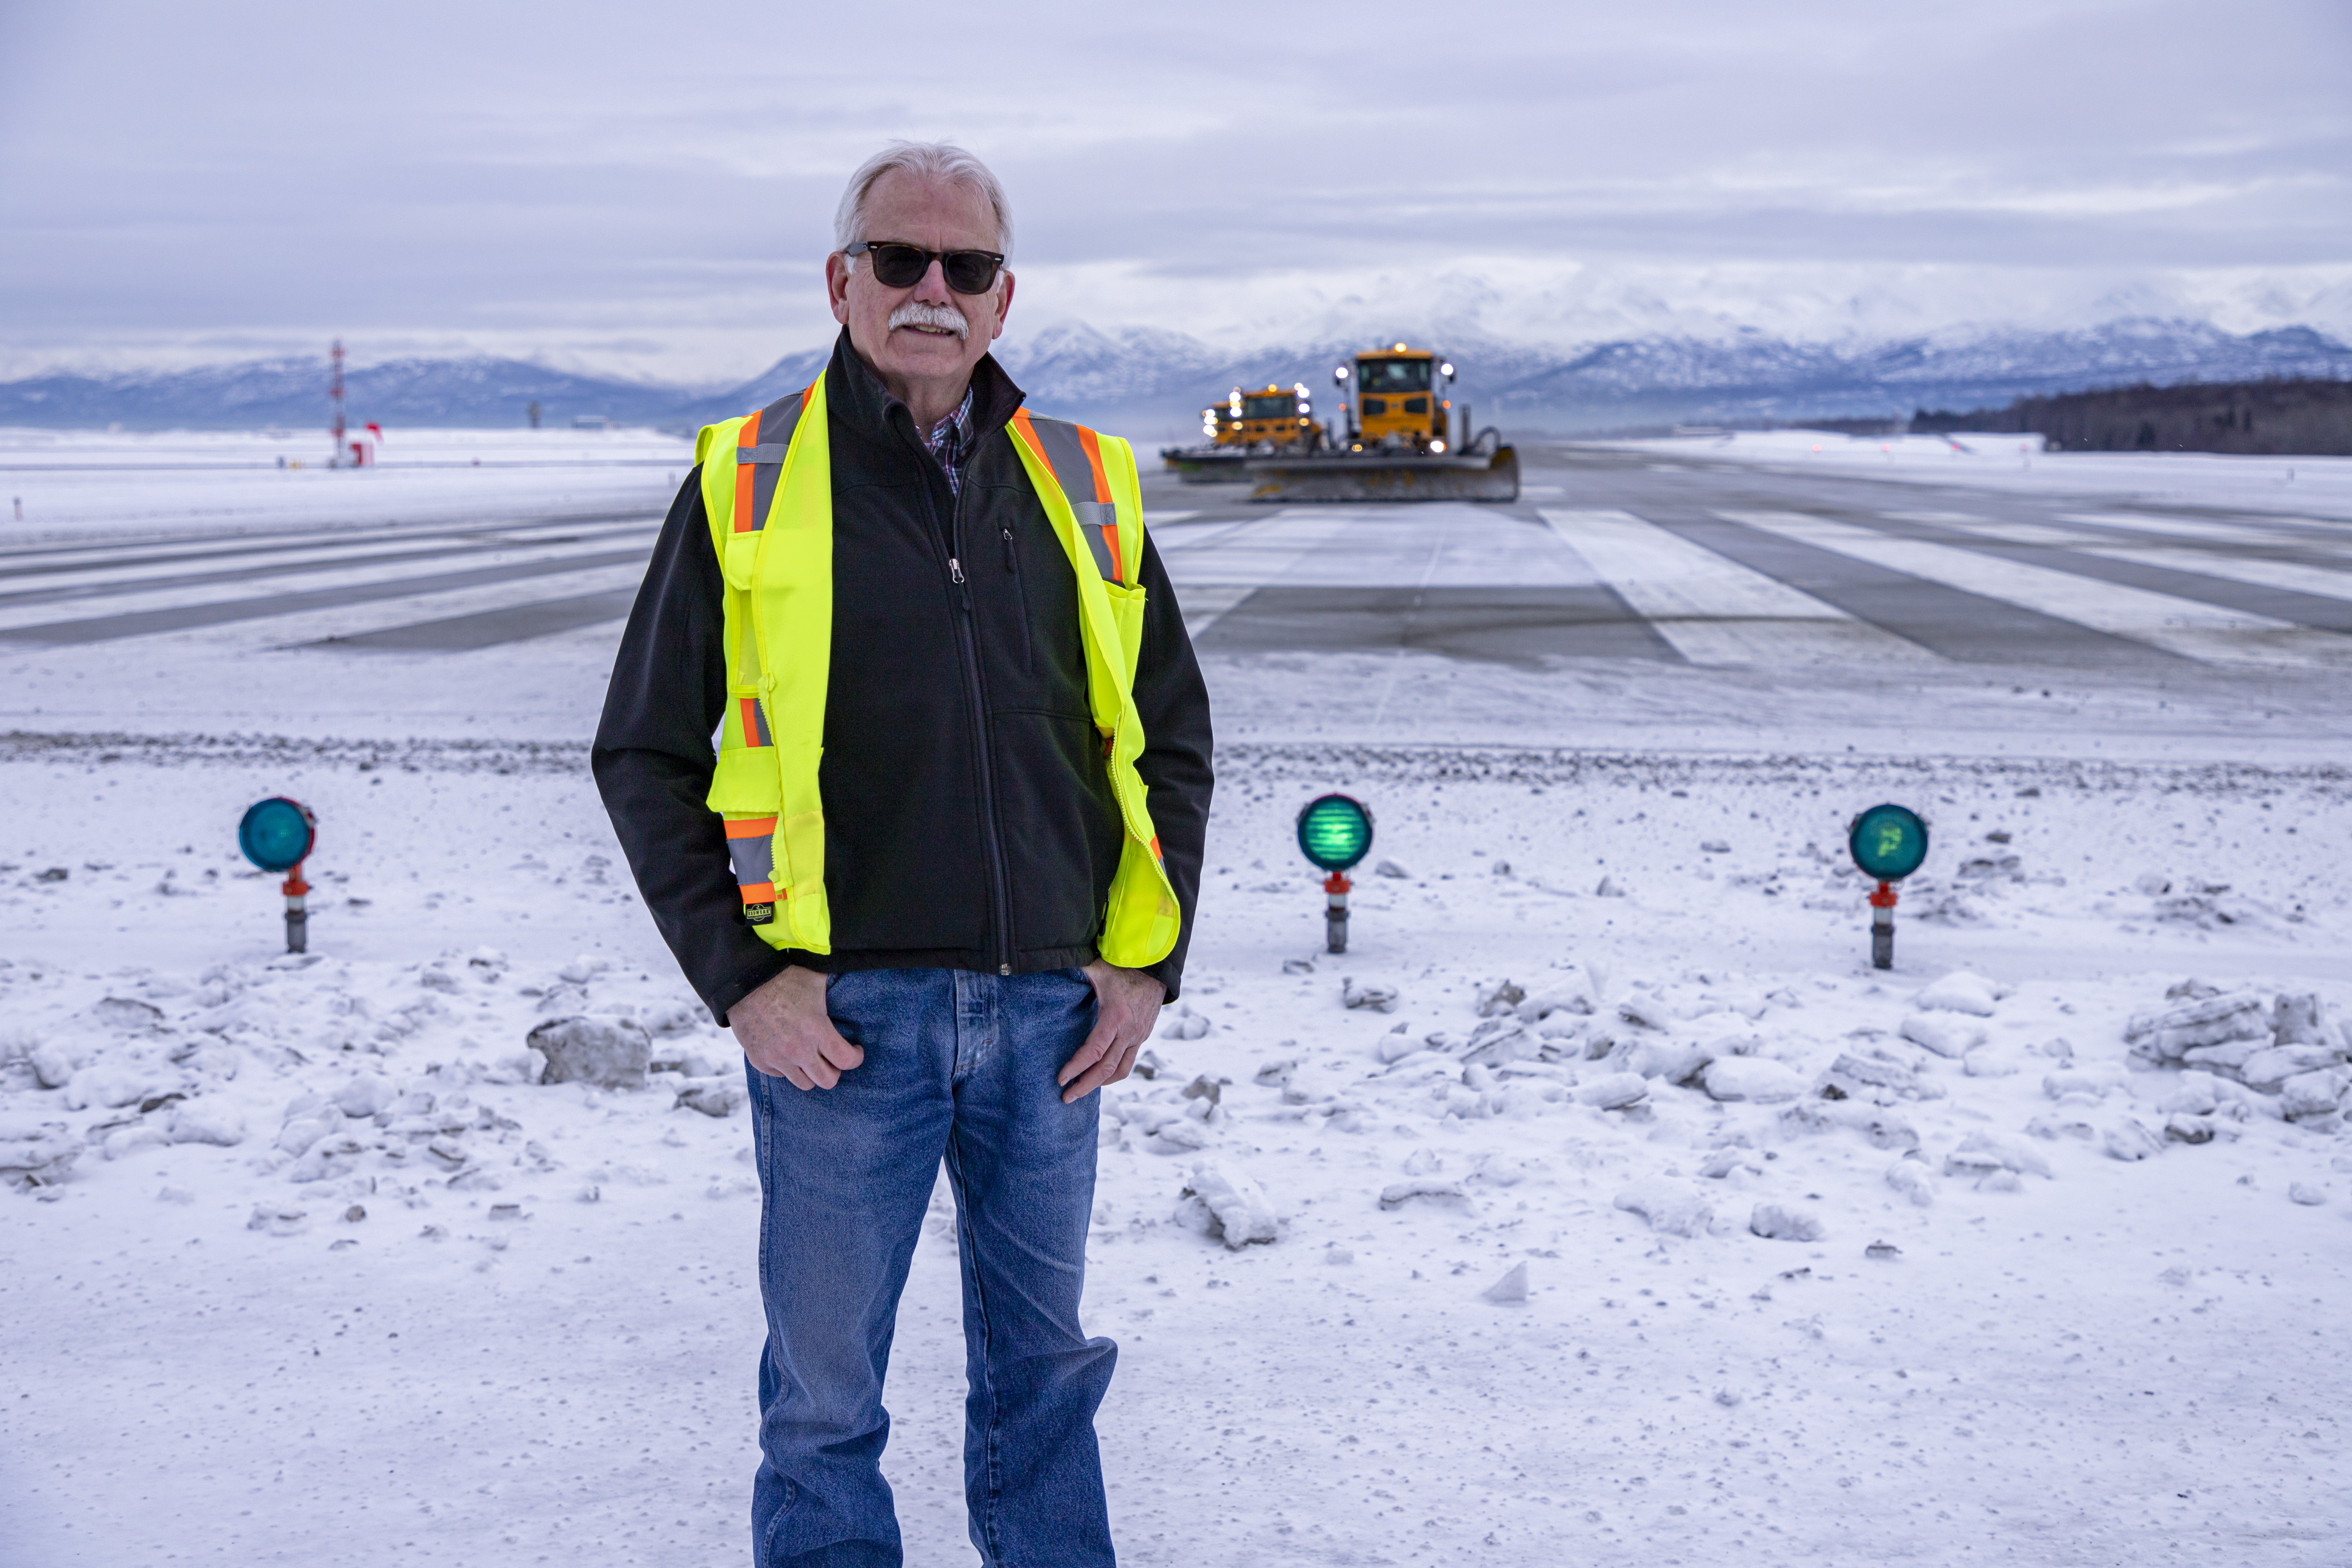 Ice Airport Alaska Season 4 Episode 7